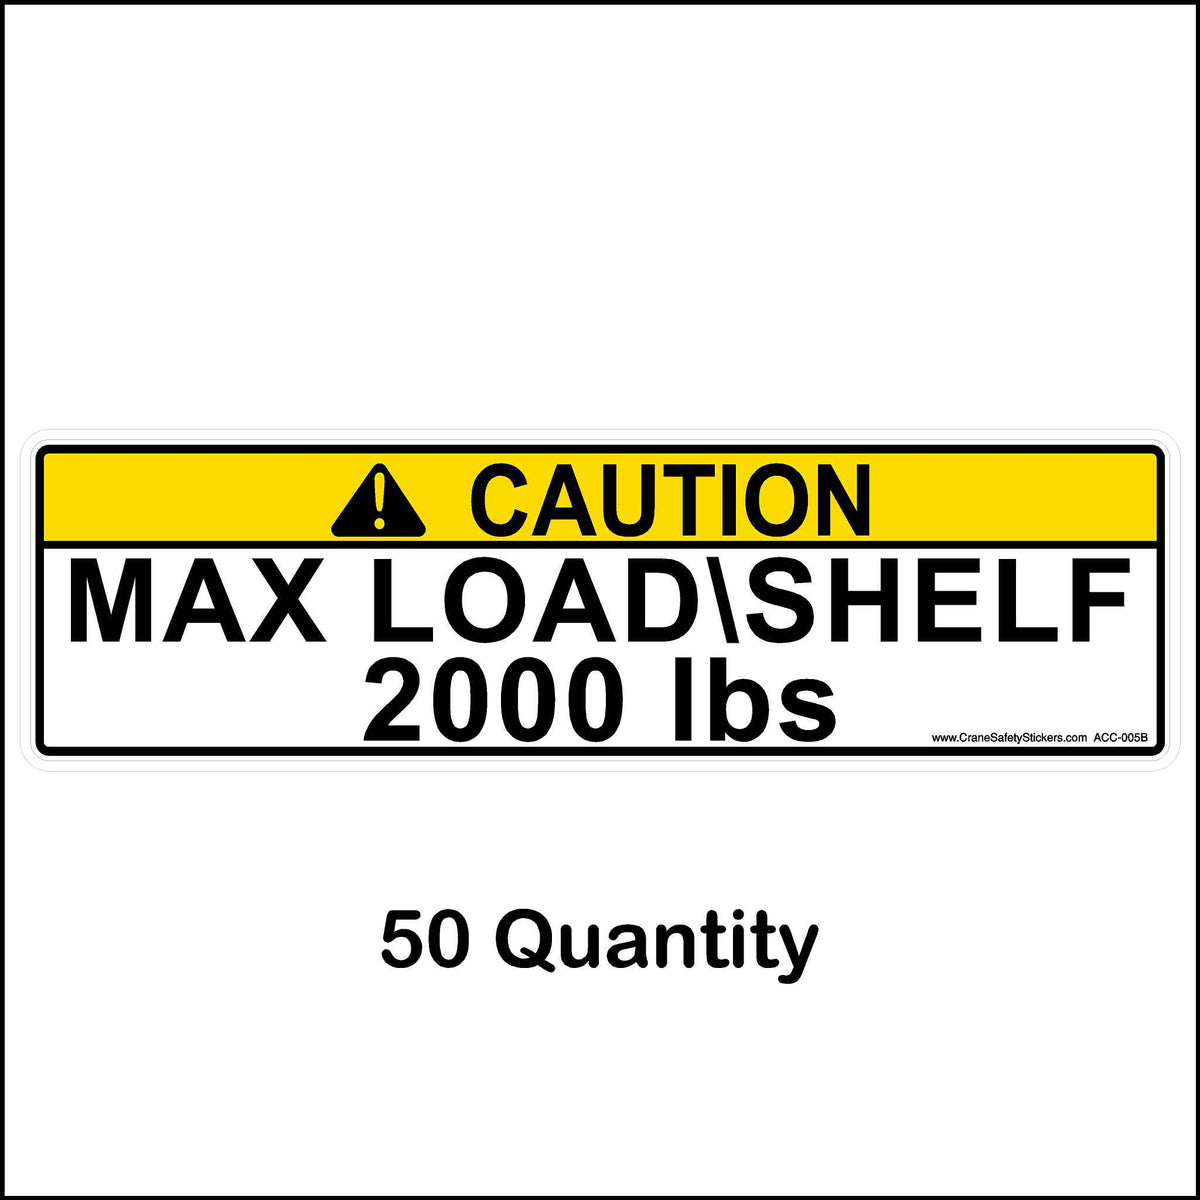 2000 lbs maximum load shelf pallet racking sticker 50 quantity.